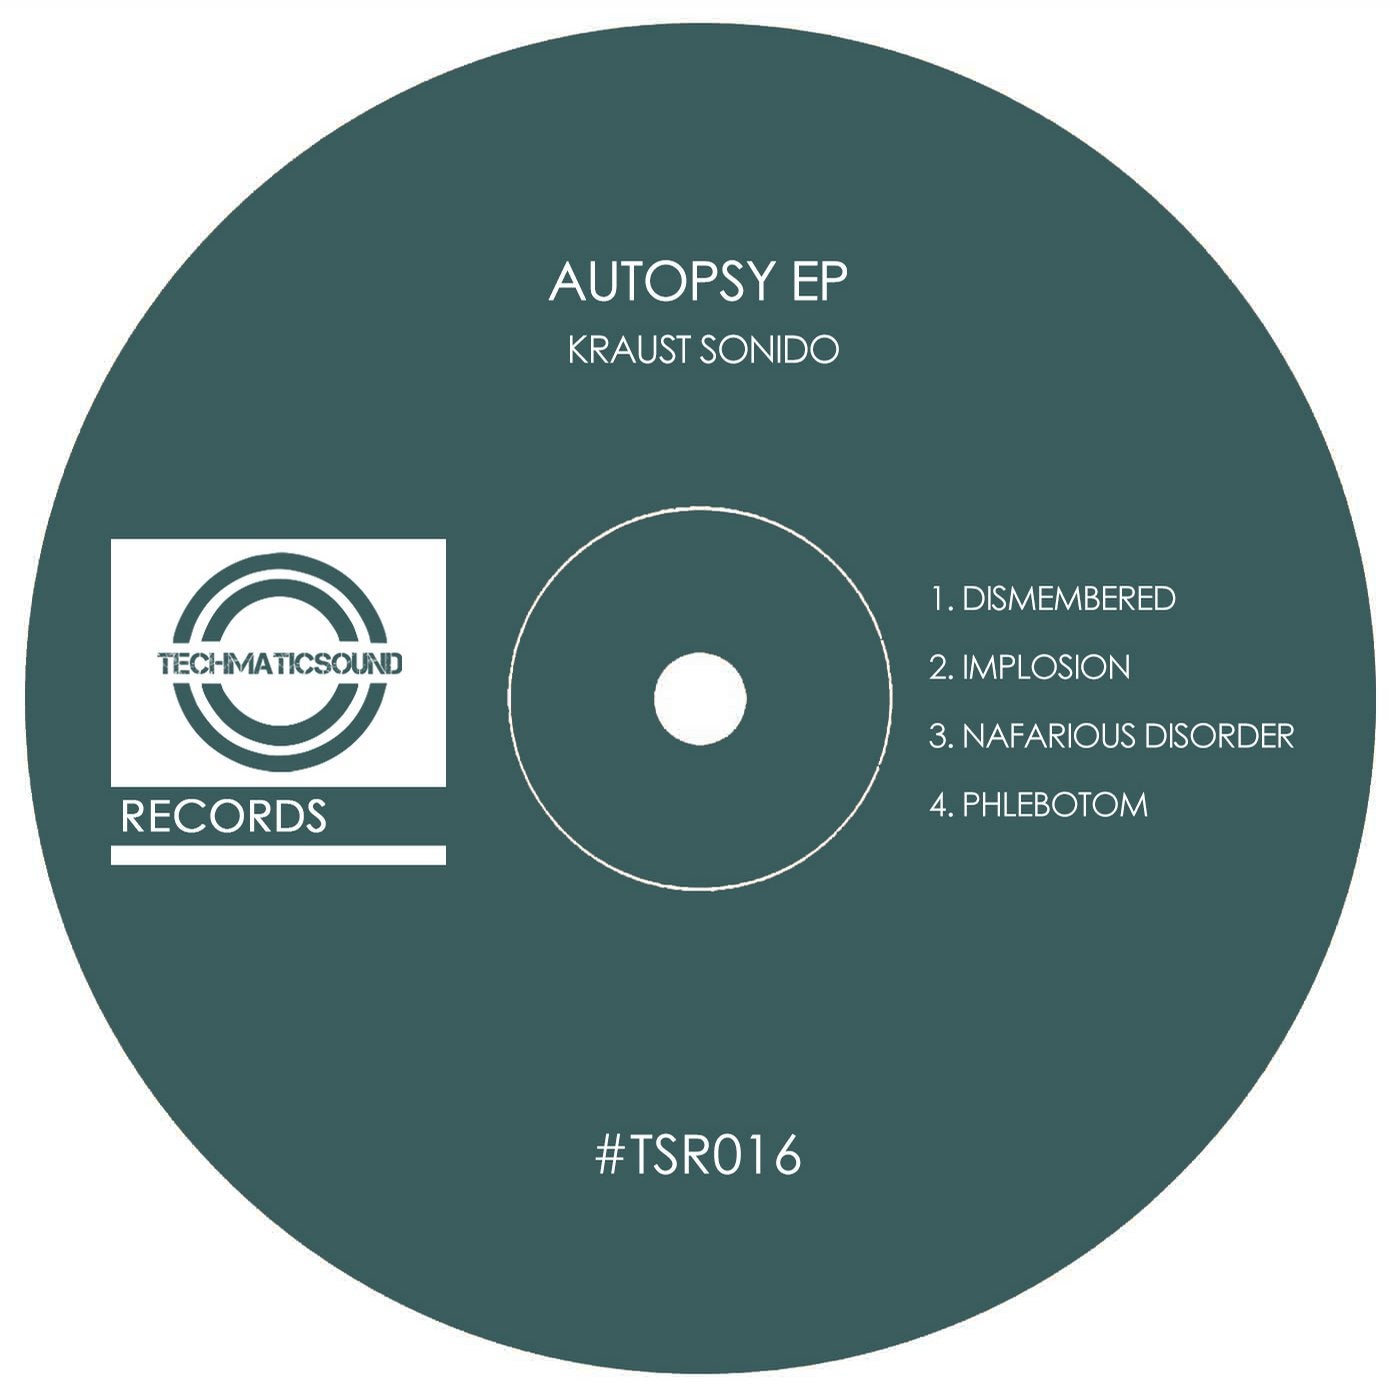 Autopsy EP